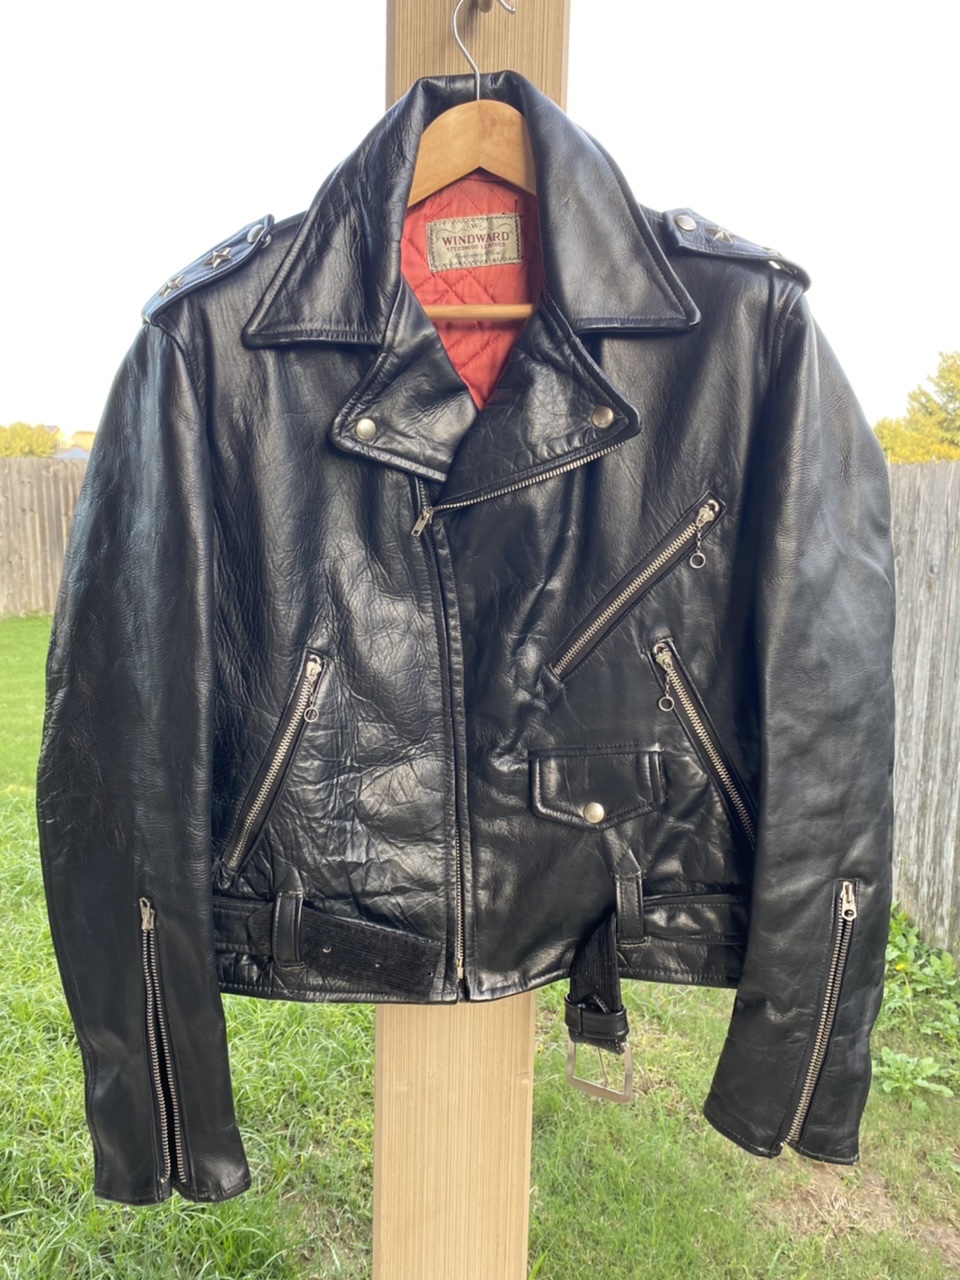 Montgomery Ward (Windward) Motorcycle Jacket History 1947-1963 | The ...